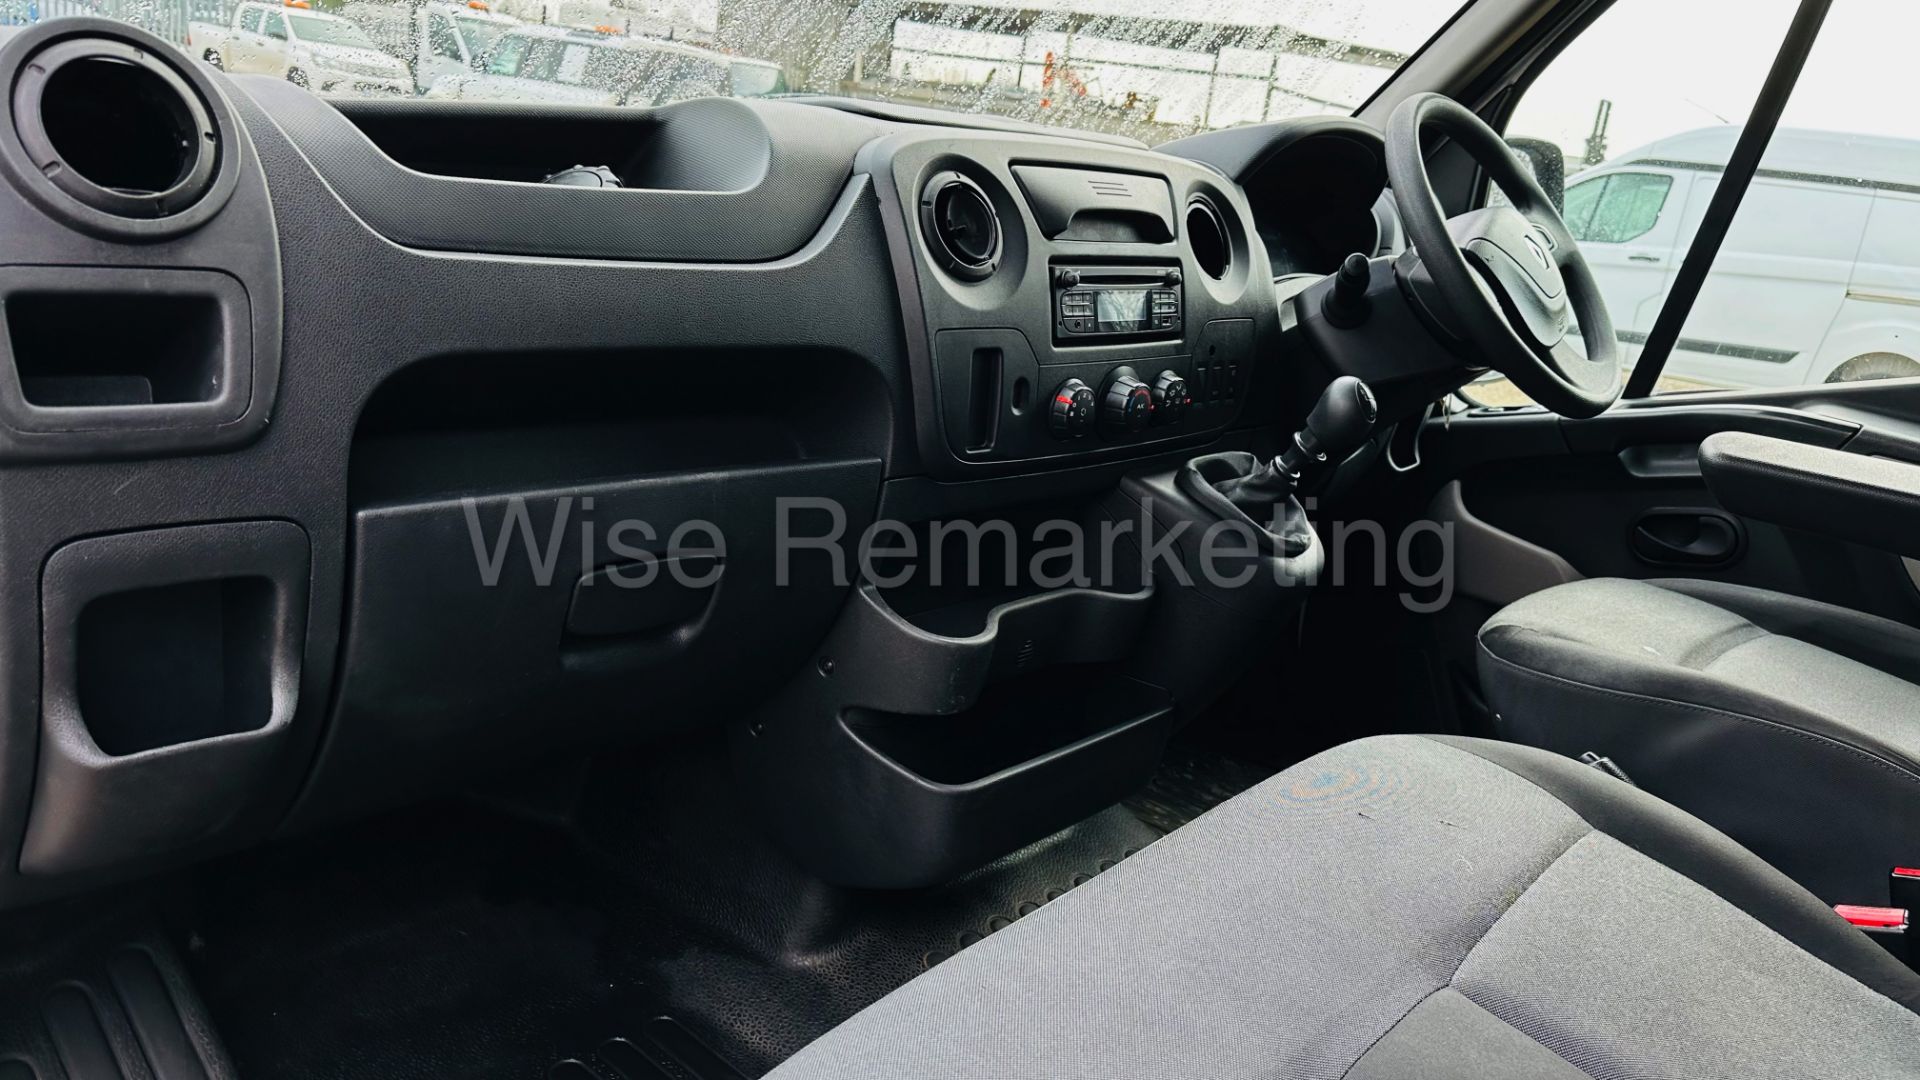 Renault Master 2.3 Dci *LWB Low Loader / Luton Box* (2019) Euro 6 / U-LEZ Compliant (3500 kg) *A/C* - Image 18 of 34